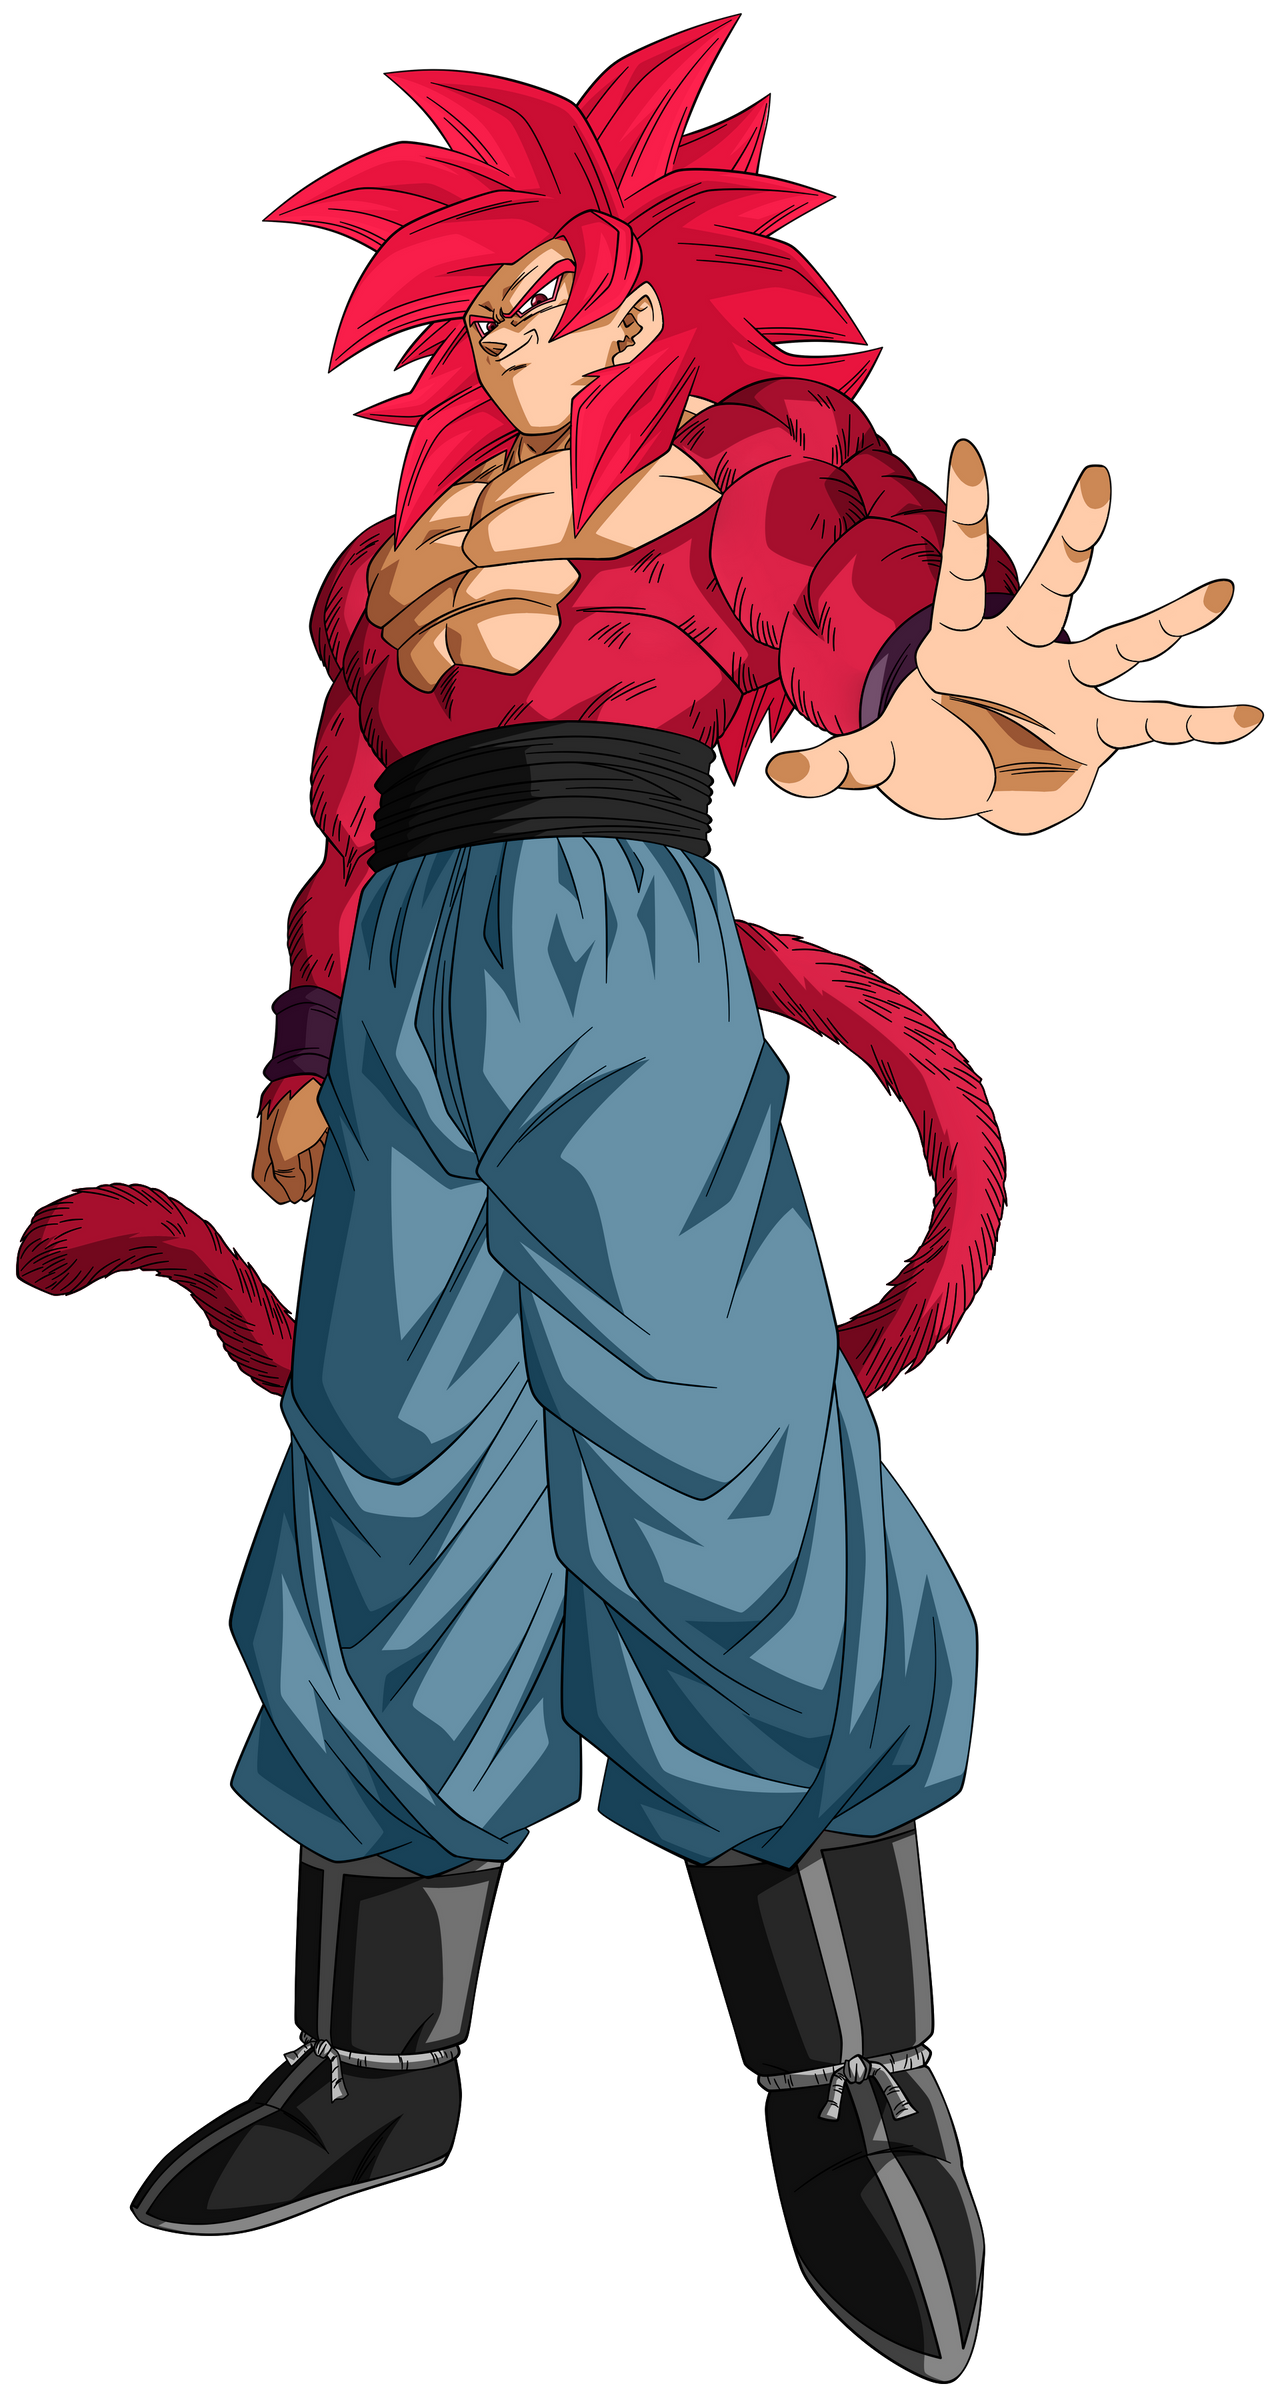 Goku Super Saiyan 4 by BrusselTheSaiyan on DeviantArt